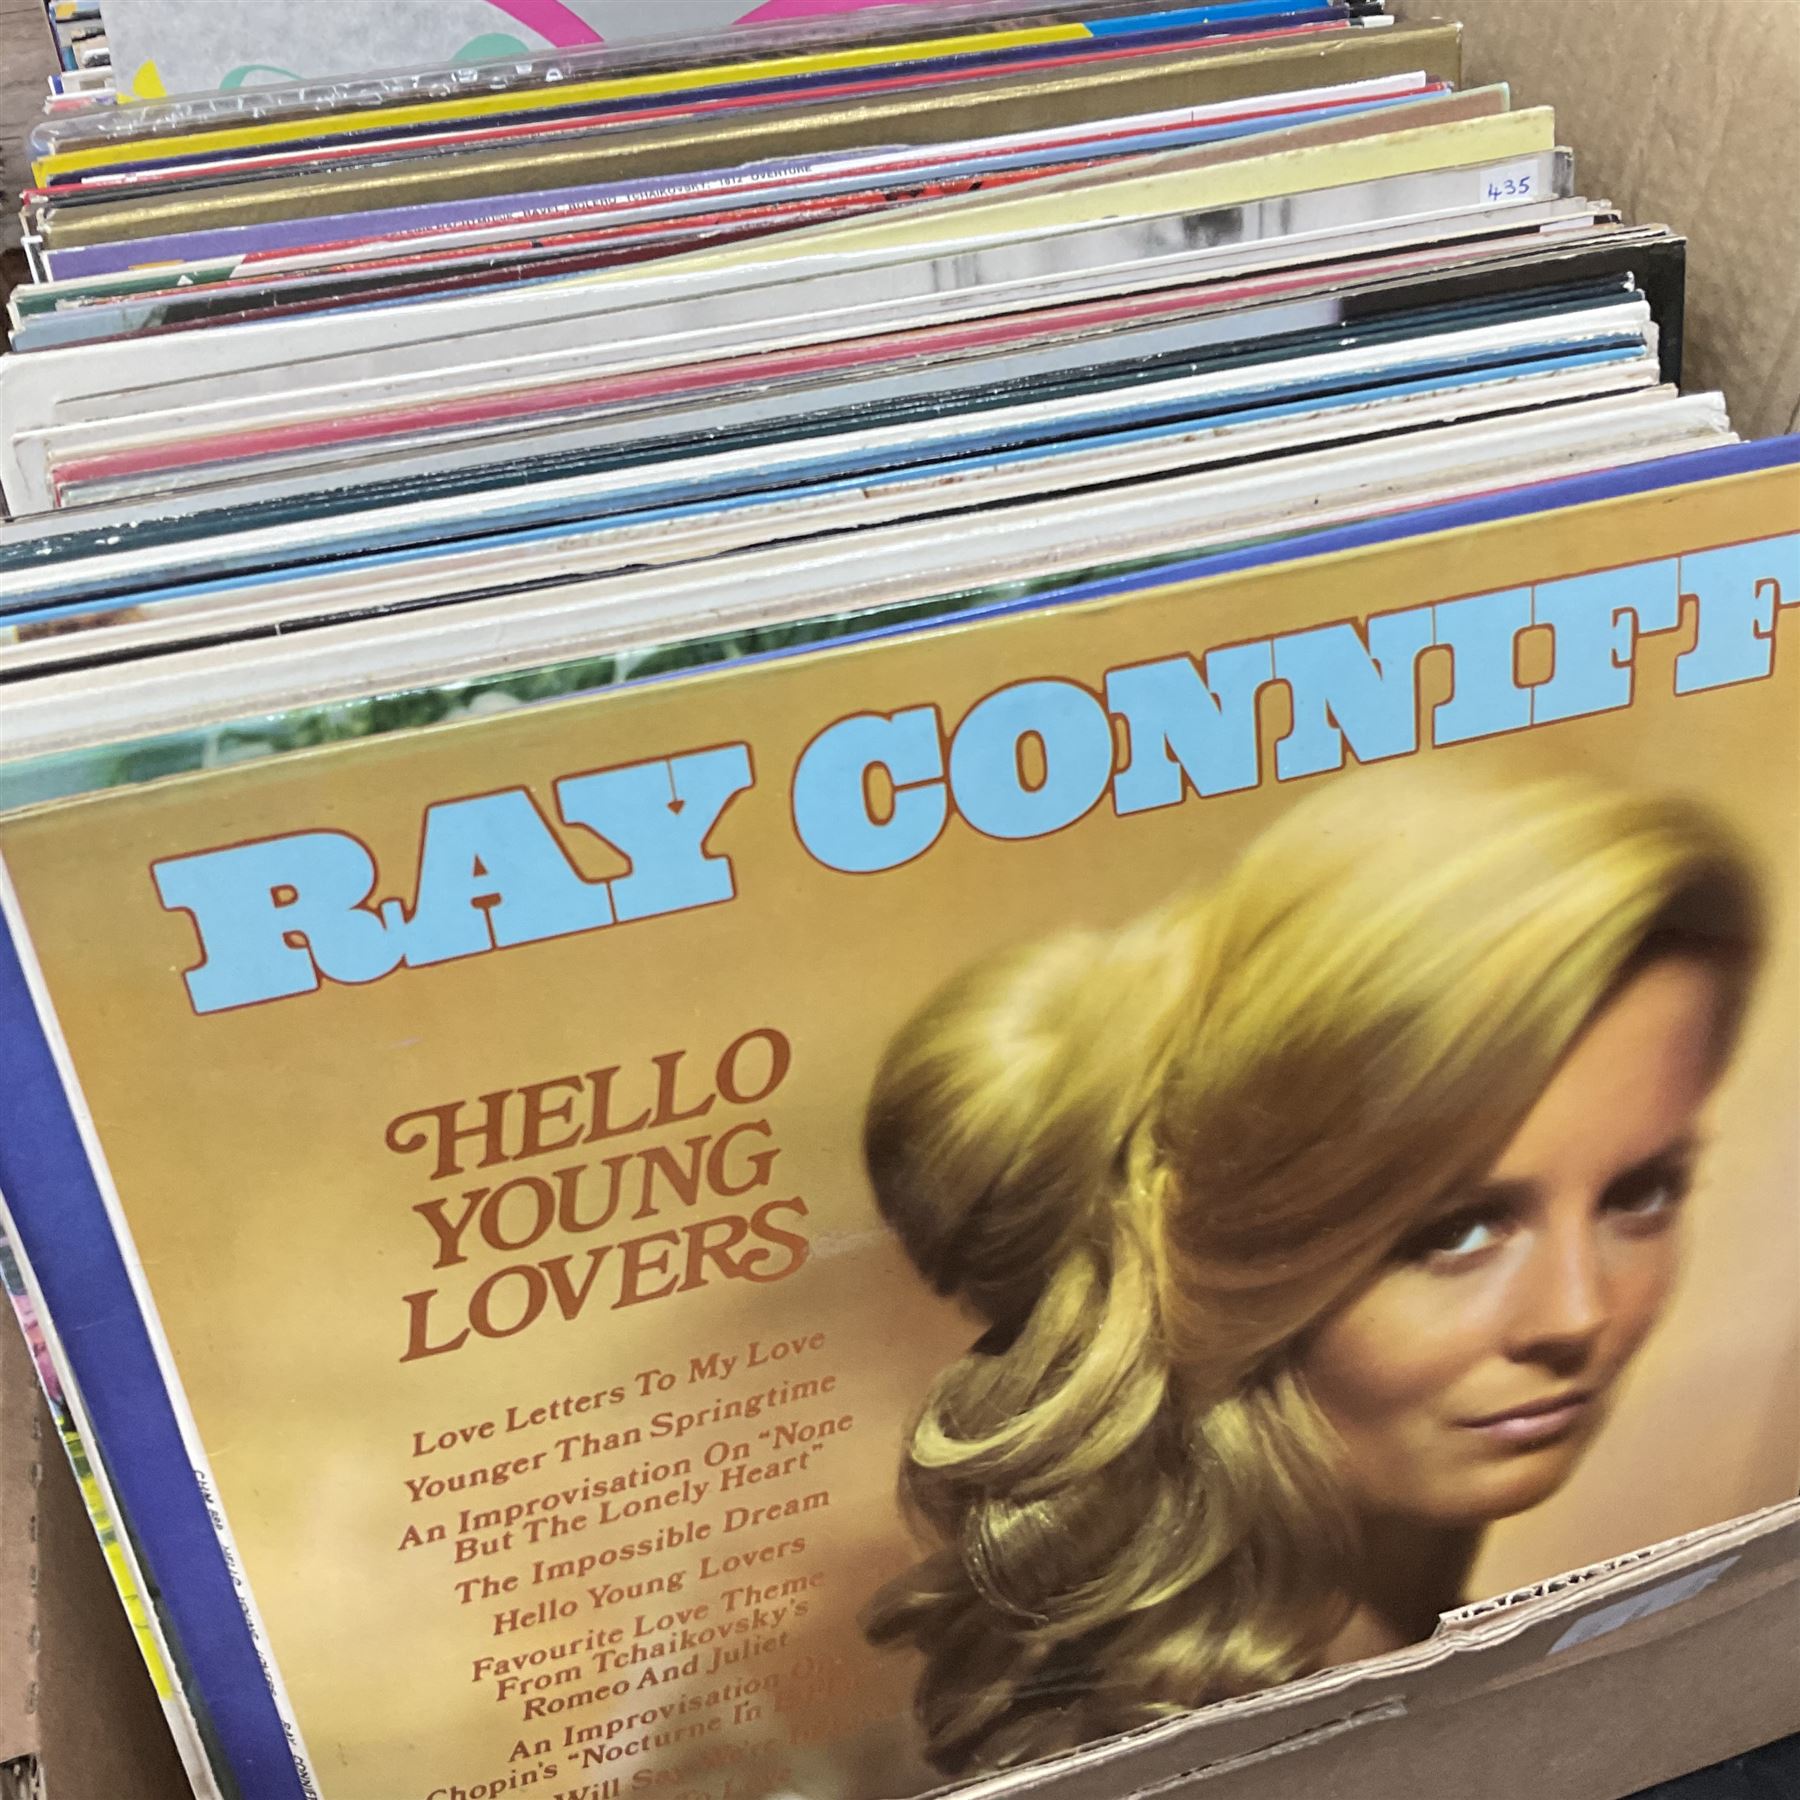 Large quantity of vinyl LPs - Image 2 of 6